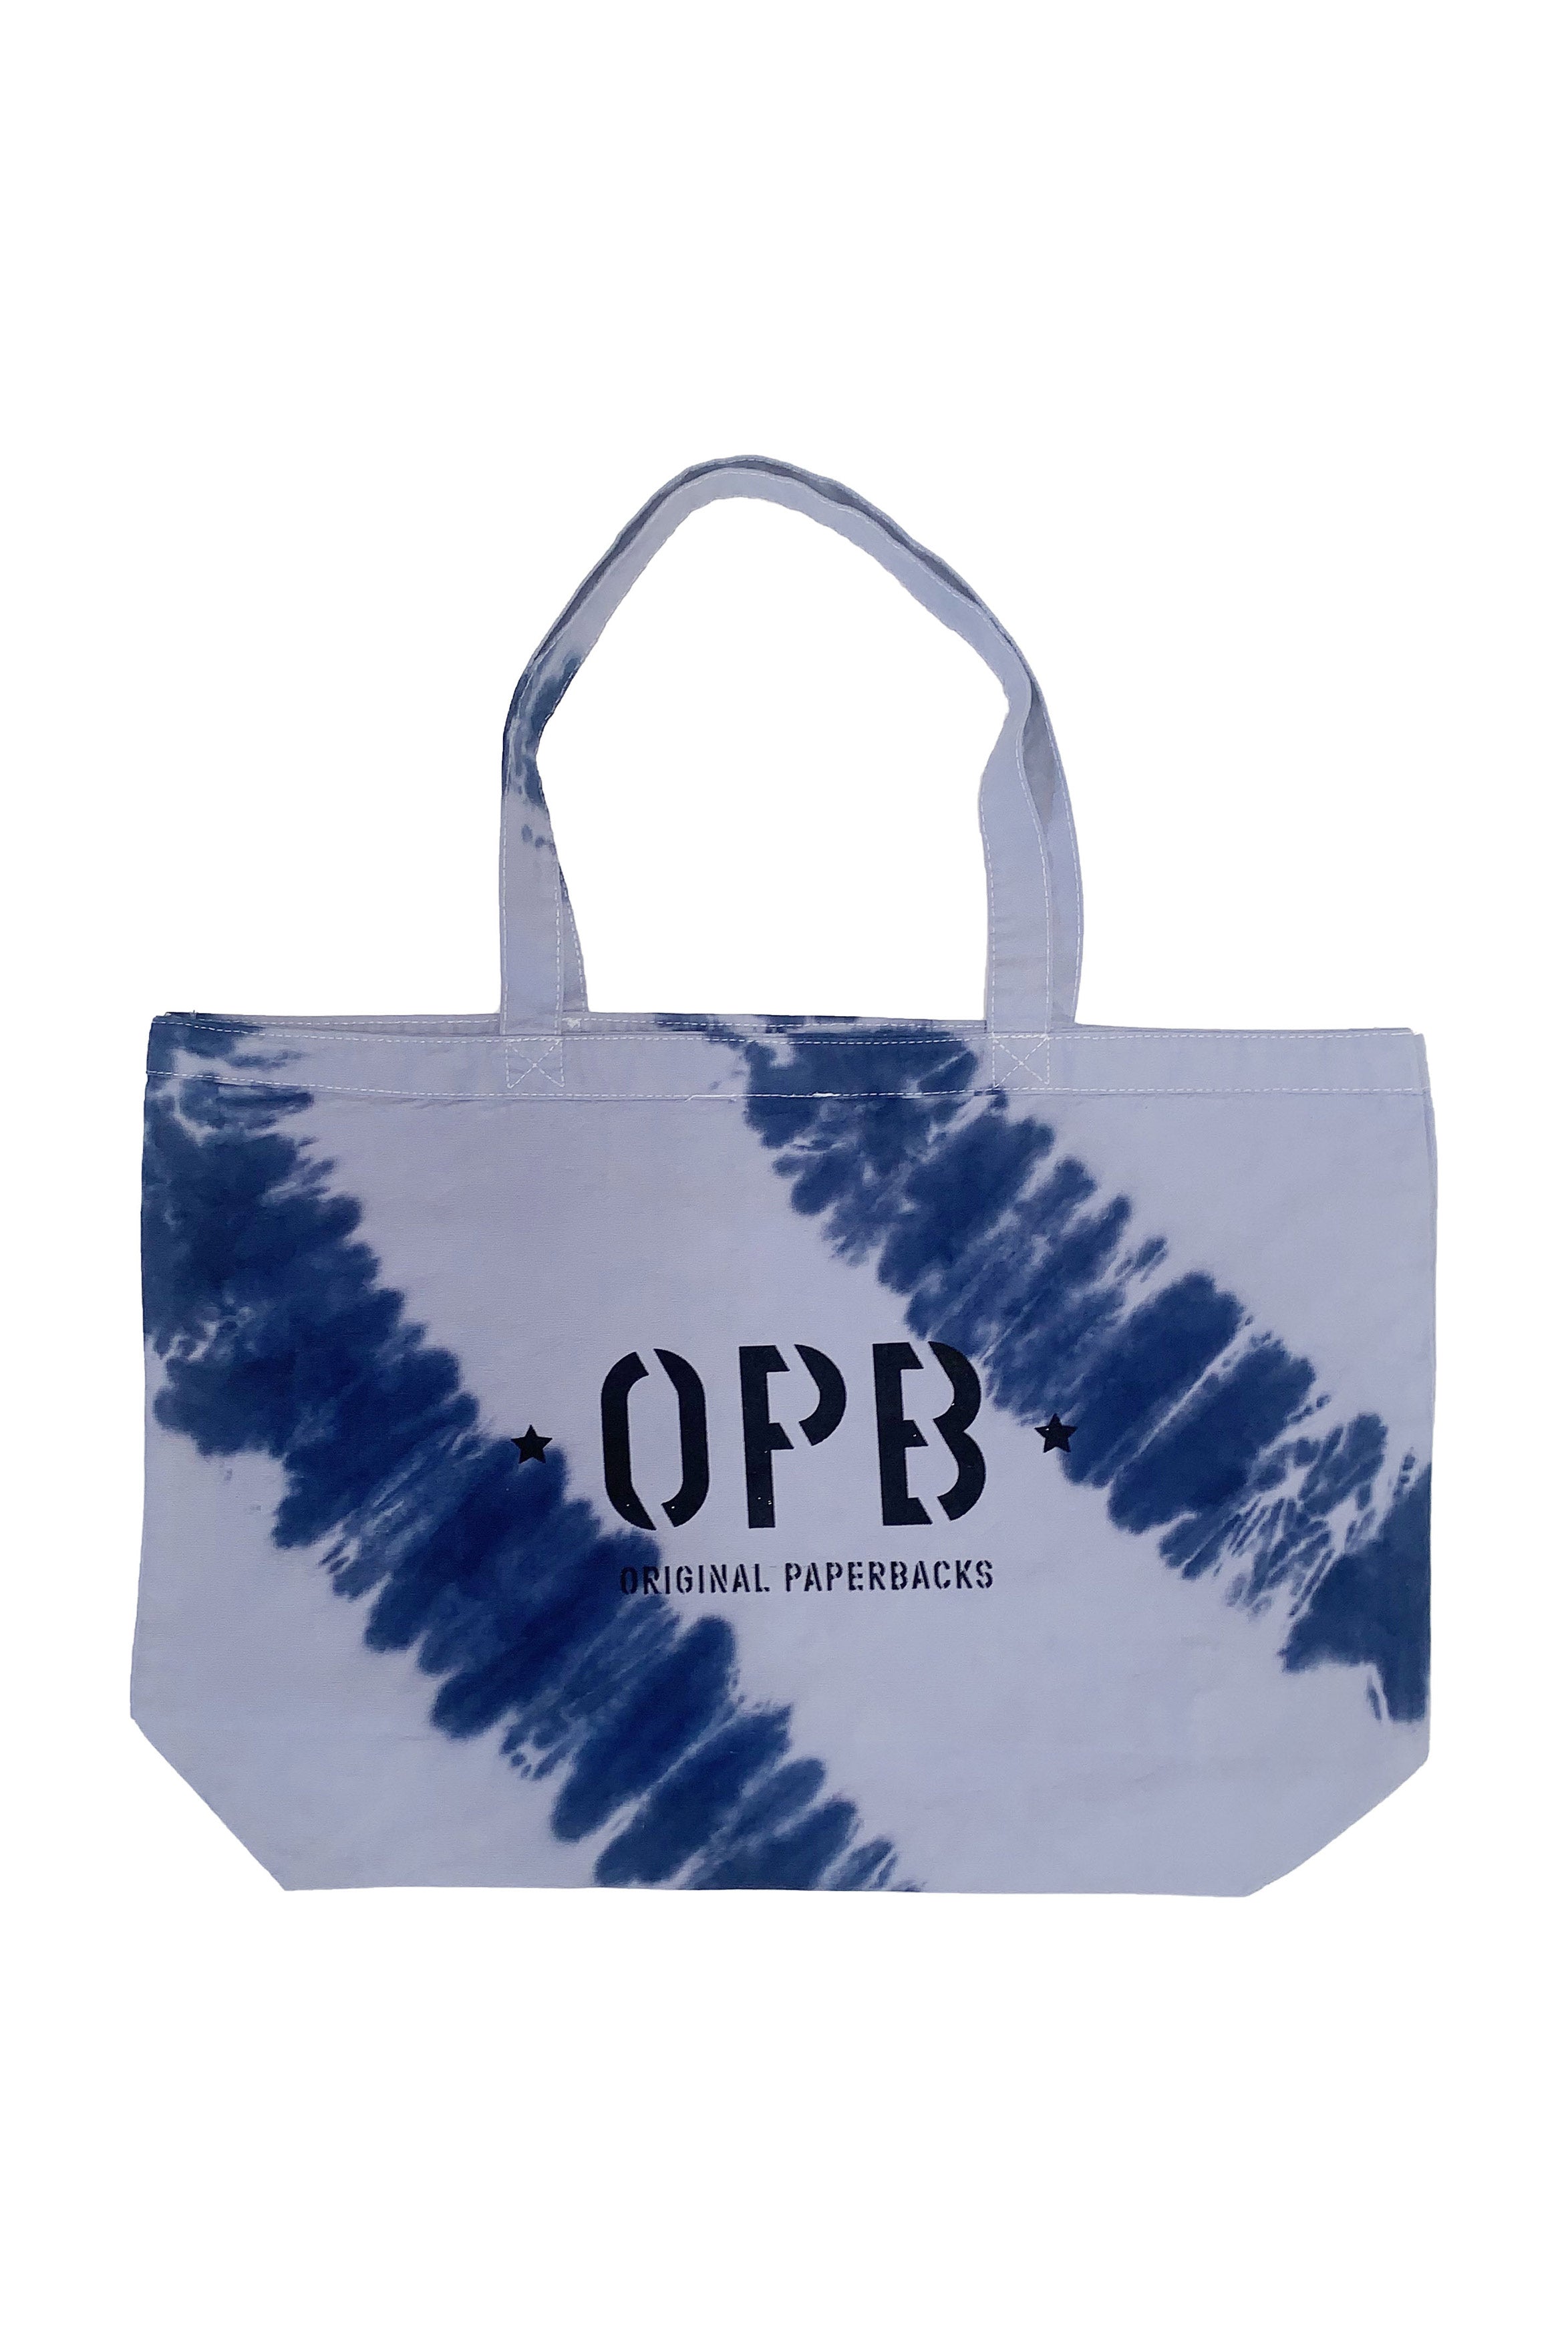 Original Paperbacks Tote Bag - French Blue/Navy Accessories